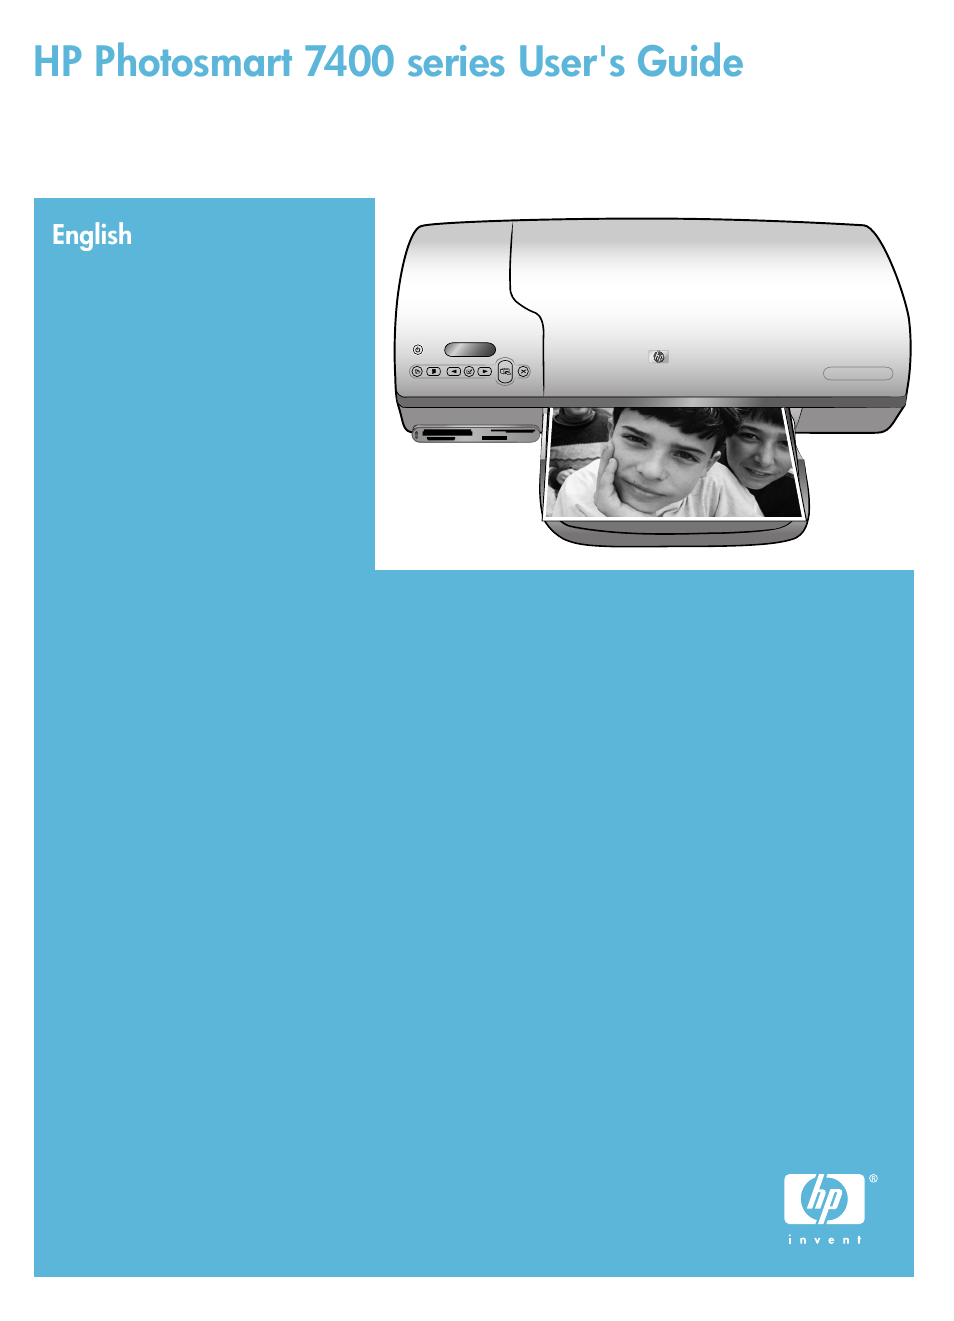 HP Photosmart 7450 Photo Printer User Manual | 51 pages